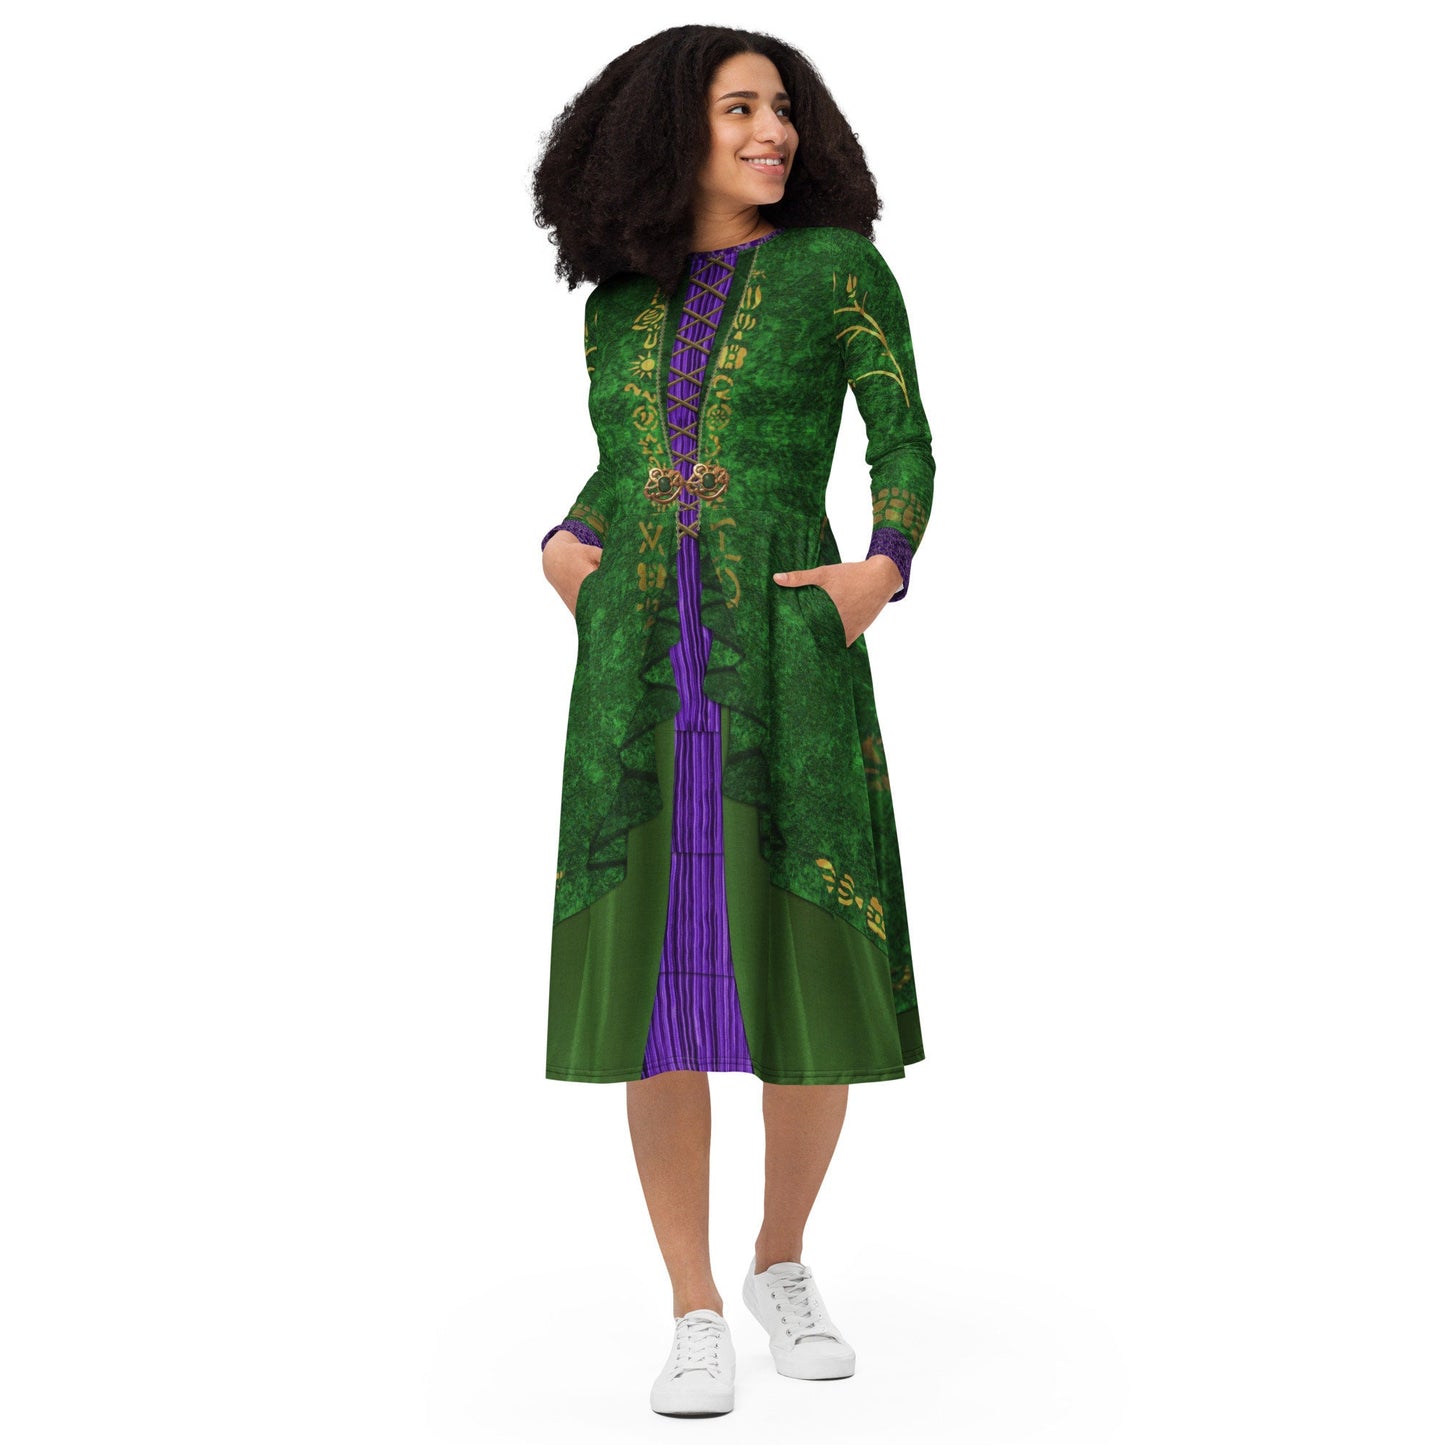 RUSH ORDER: Winifred Sanderson Inspired All-over print long sleeve midi dress